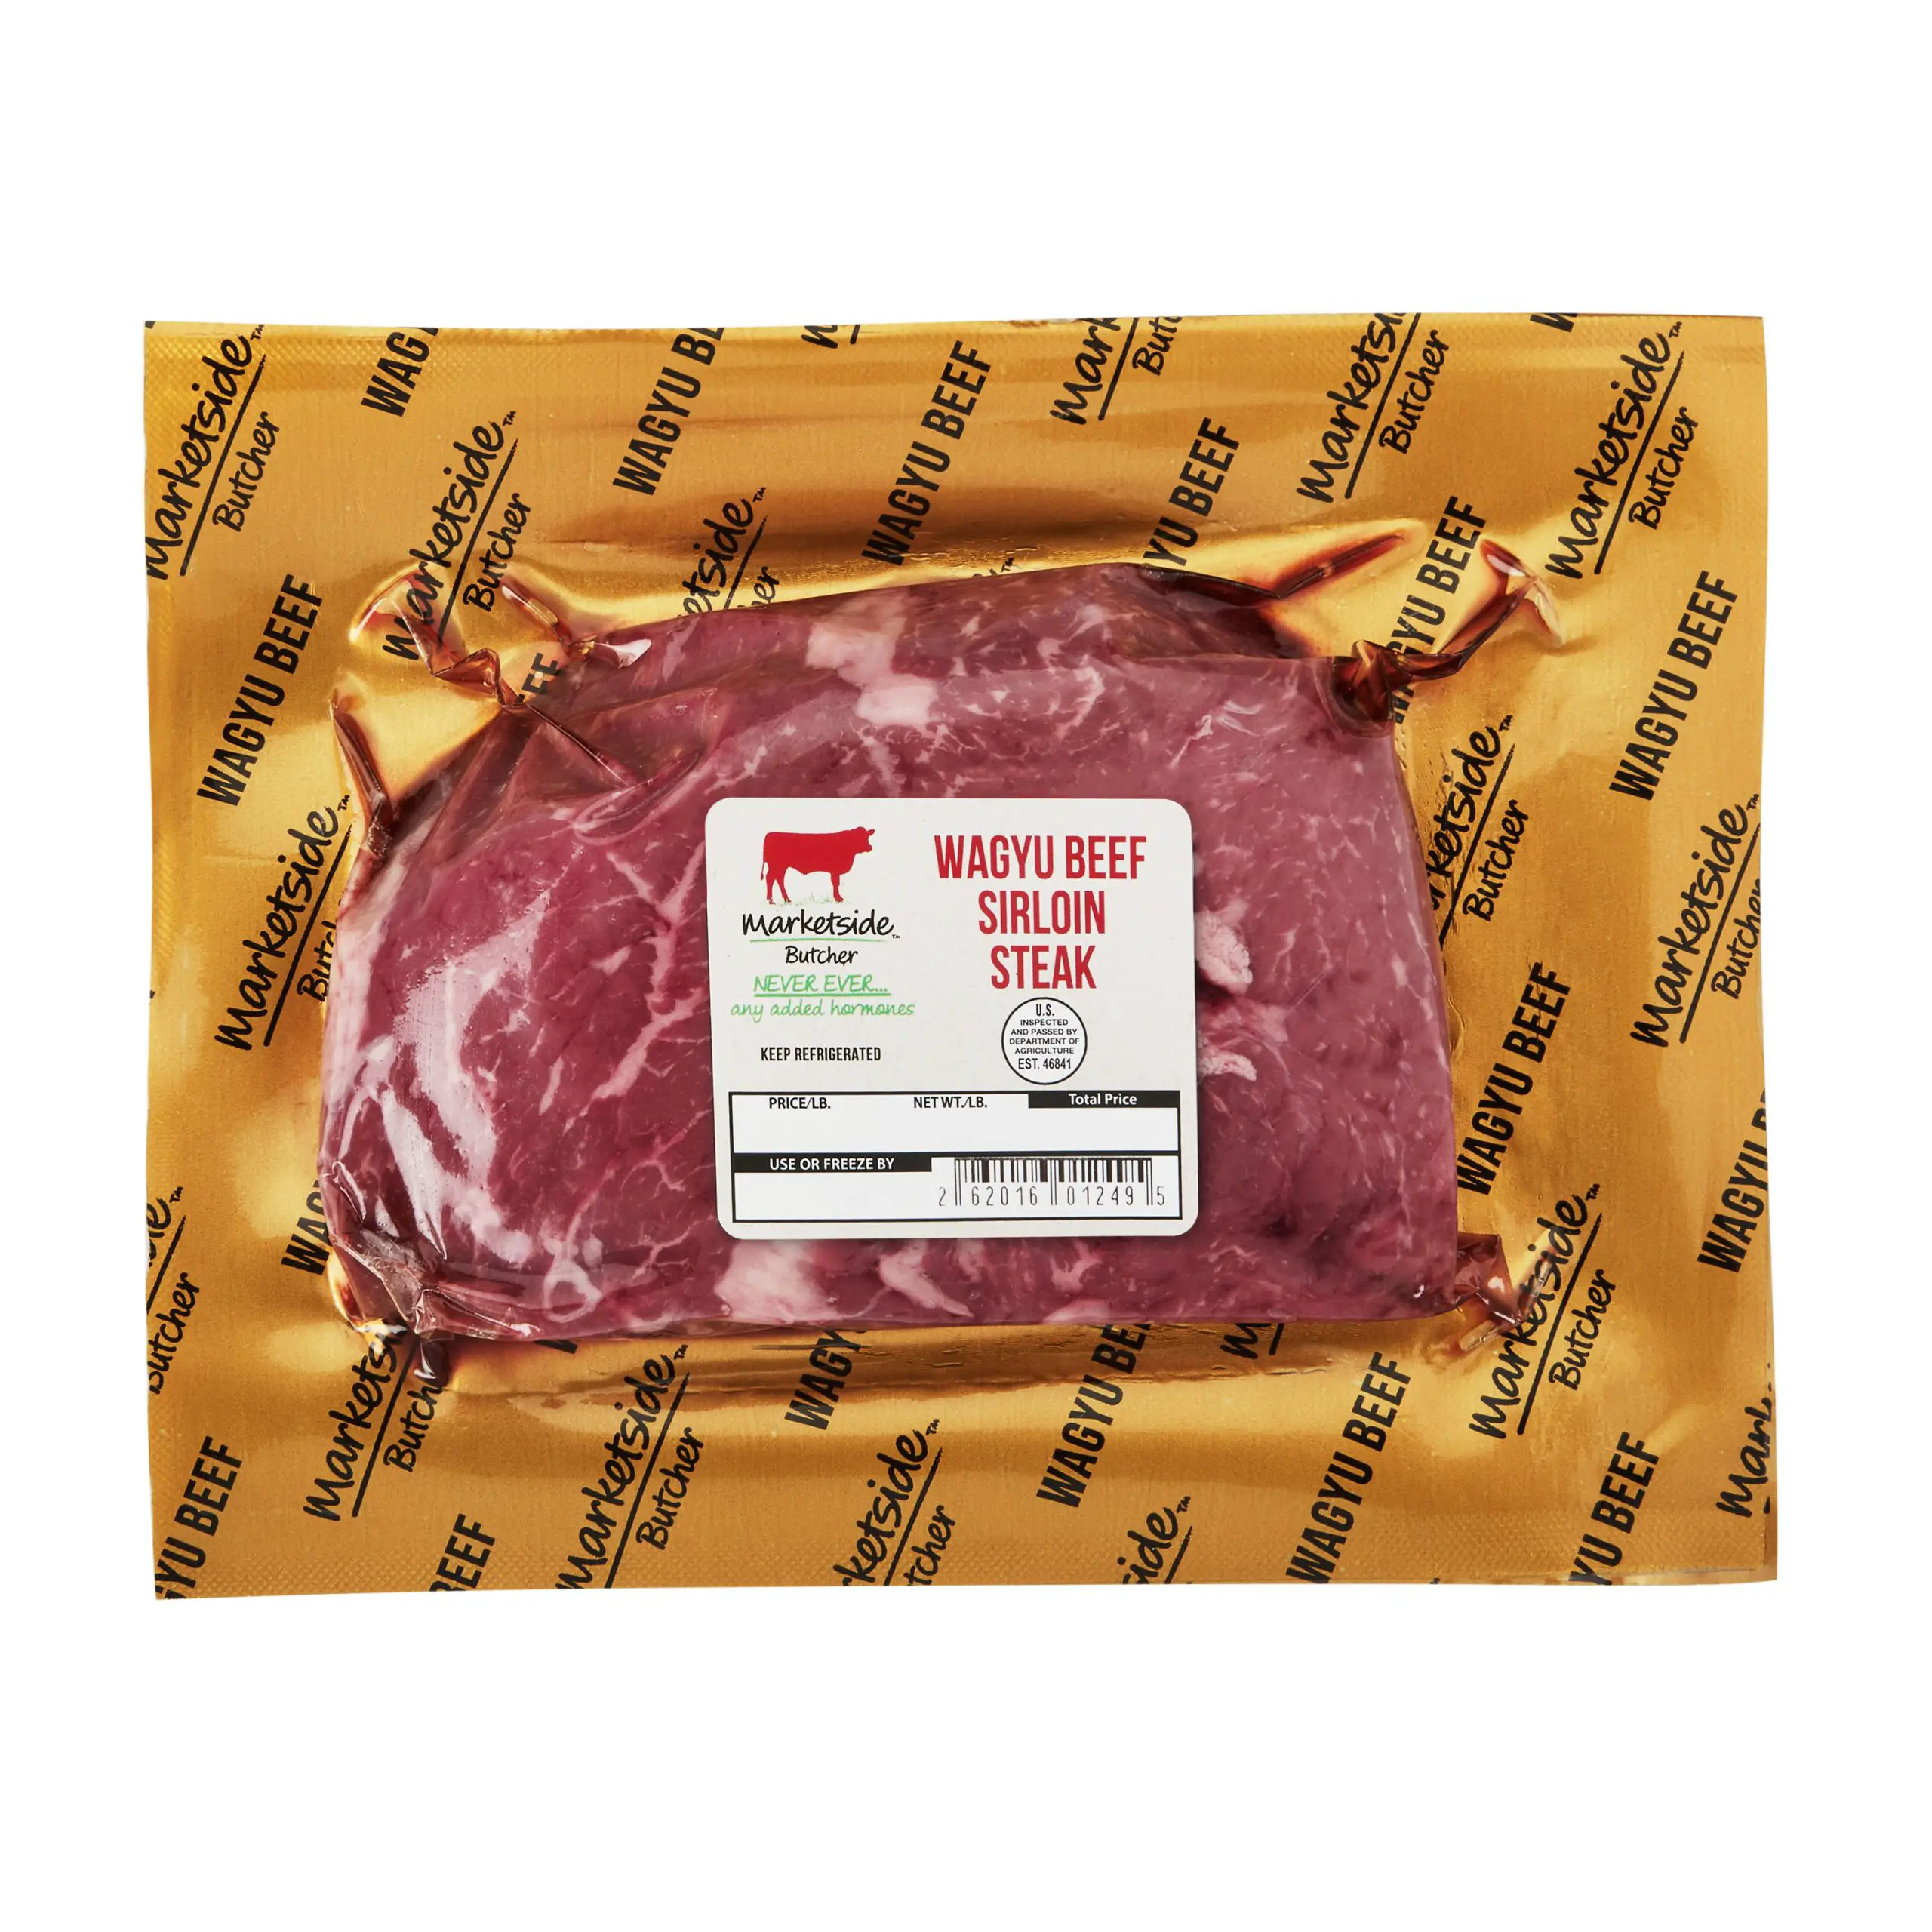 Marketside Butcher Wagyu Beef Sirloin Steak, 0.34